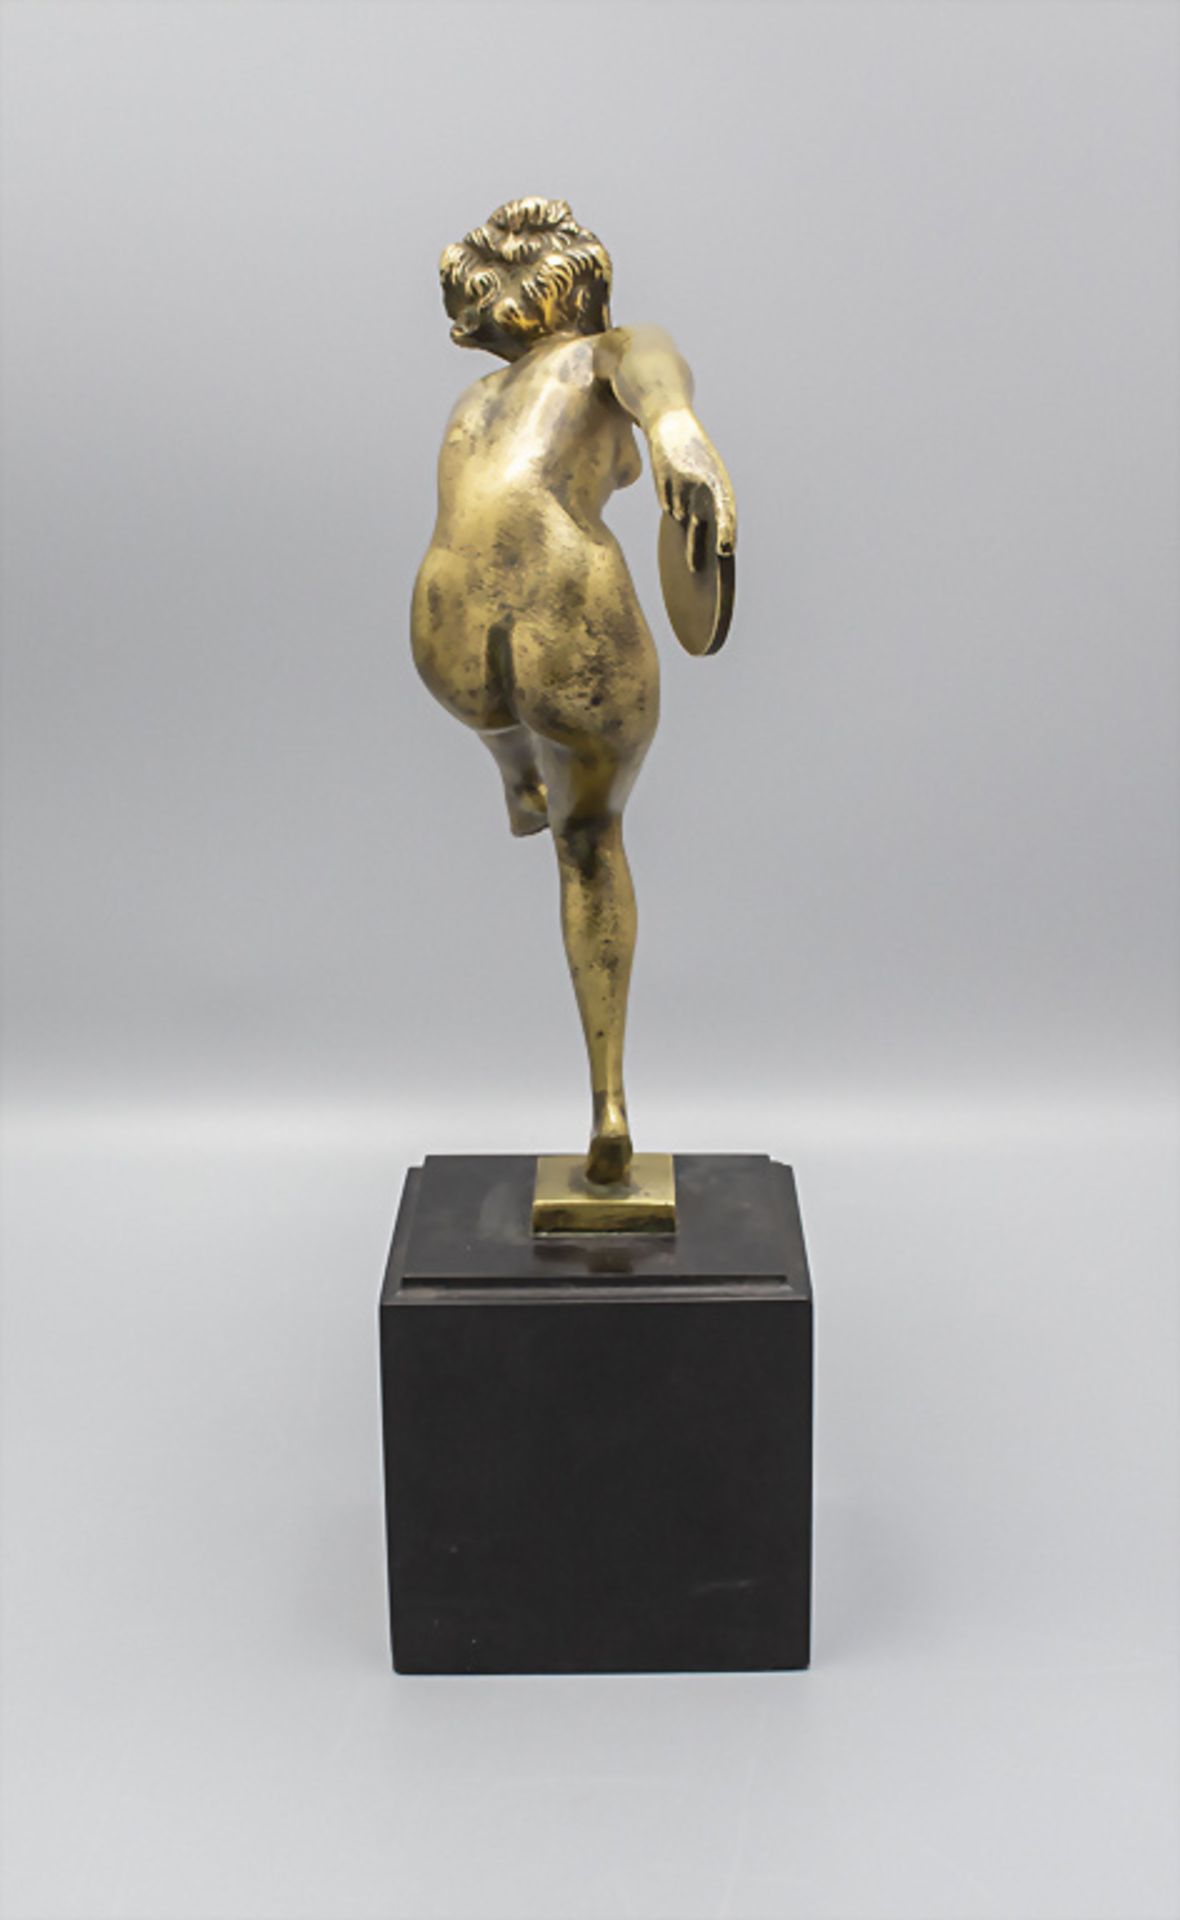 Art Déco Bronze 'Scheibentänzerin' / An Art Deco bronze 'Disc dancer', nach 1925 - Image 3 of 7